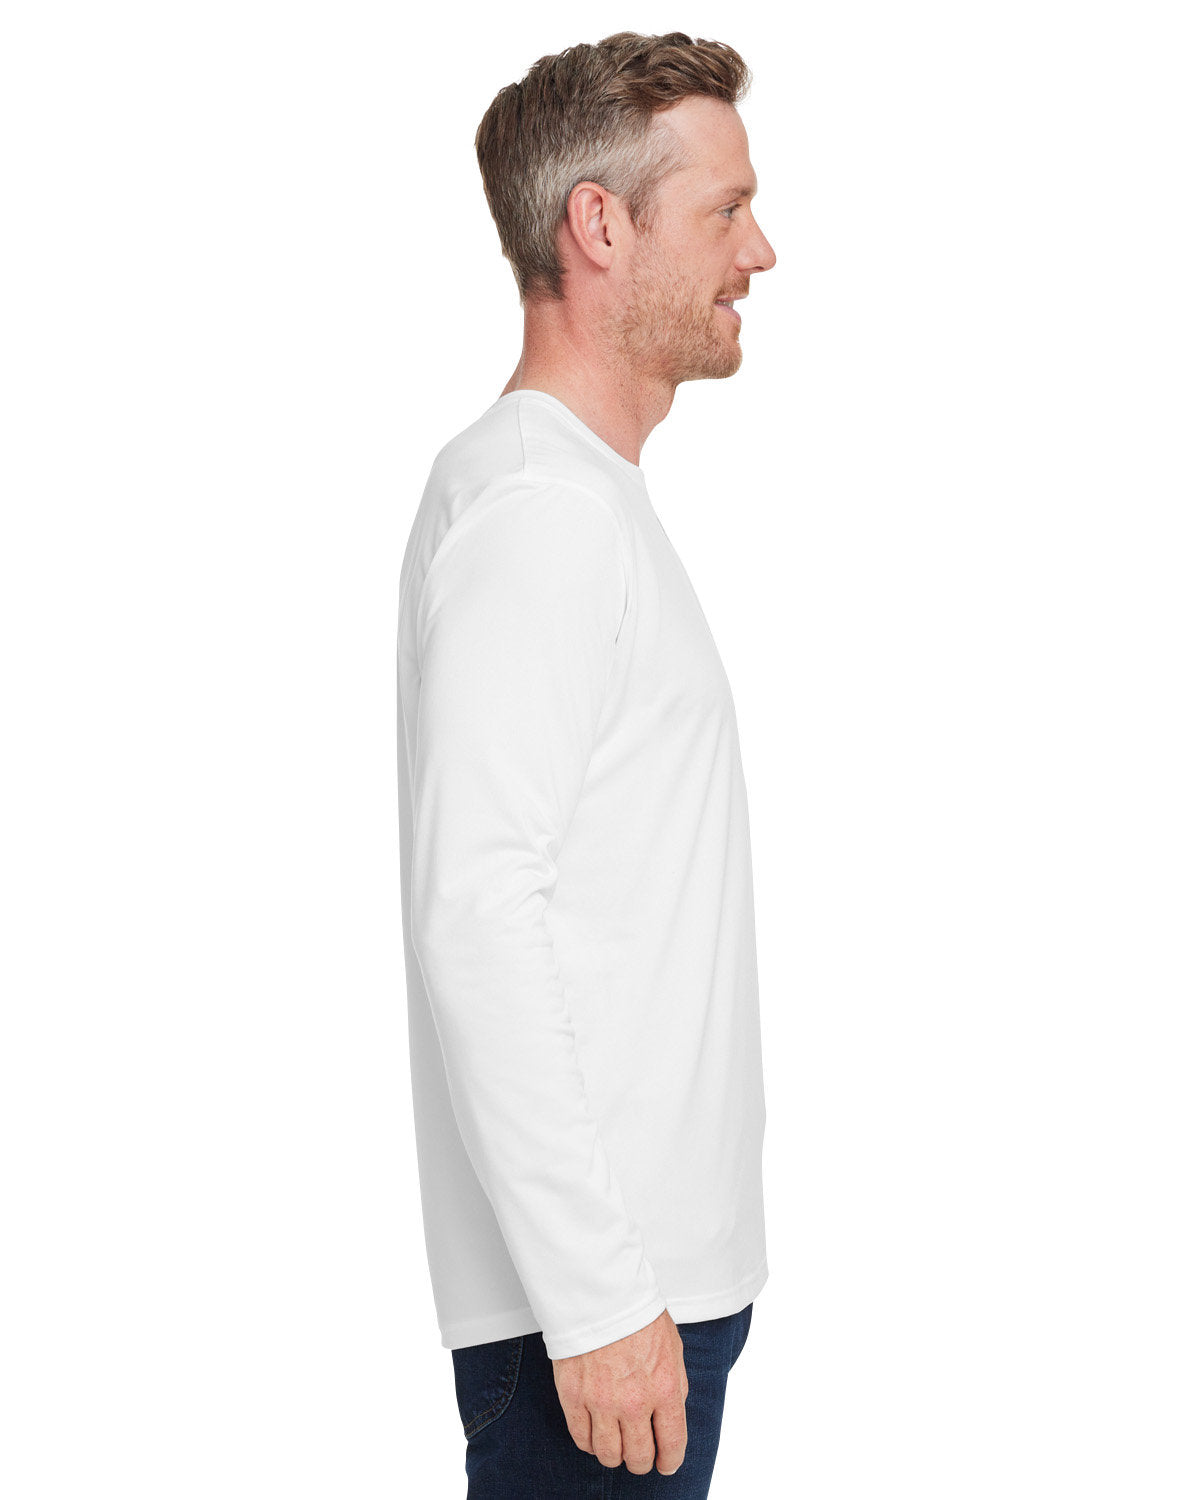 Under Armour Men's Tech Long-Sleeve Custom T-Shirts, White